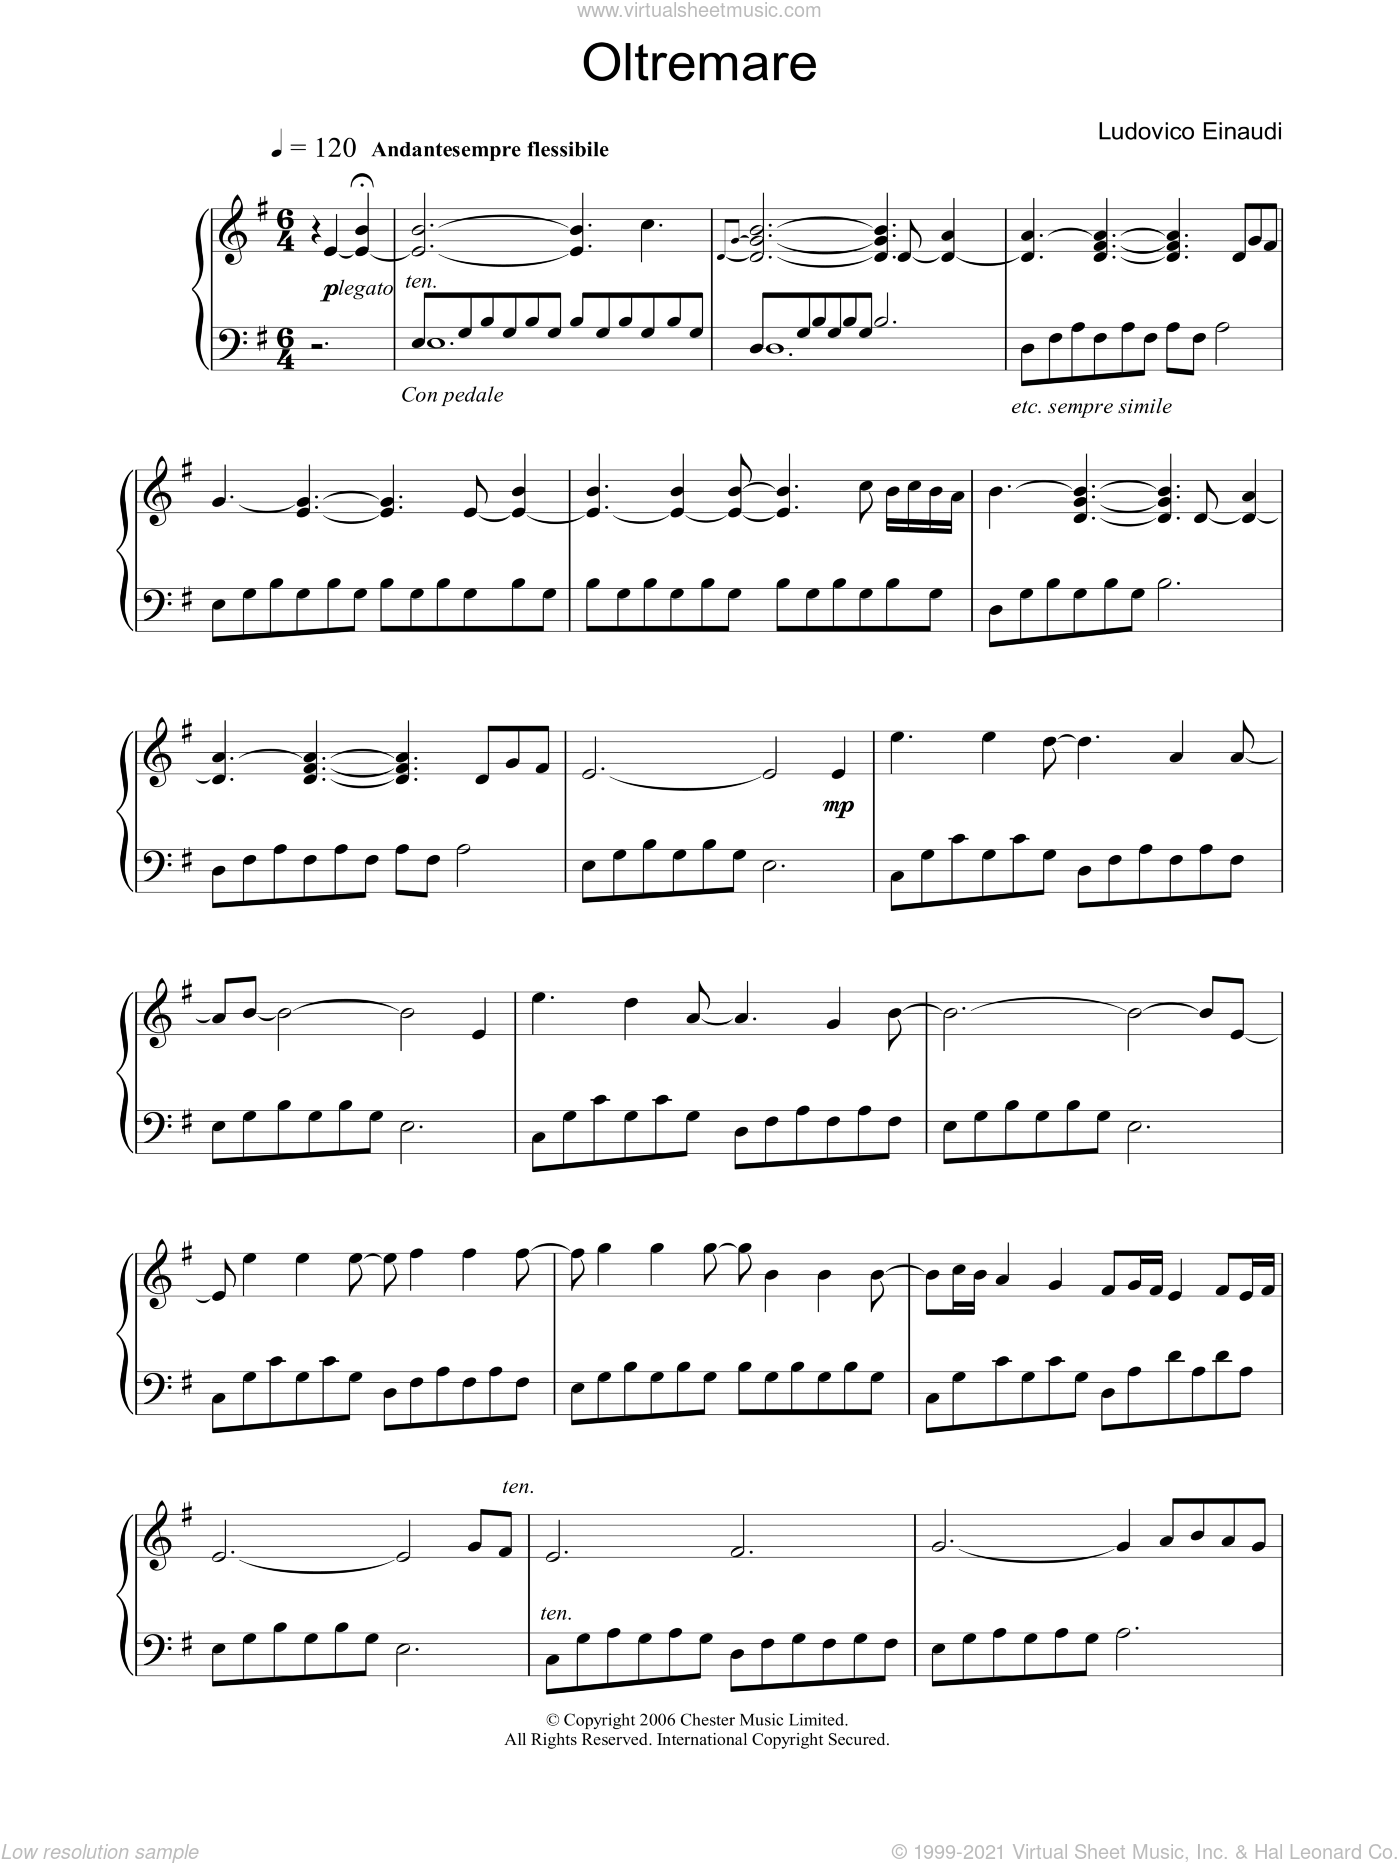 Oltremare sheet music for piano solo (PDF-interactive)